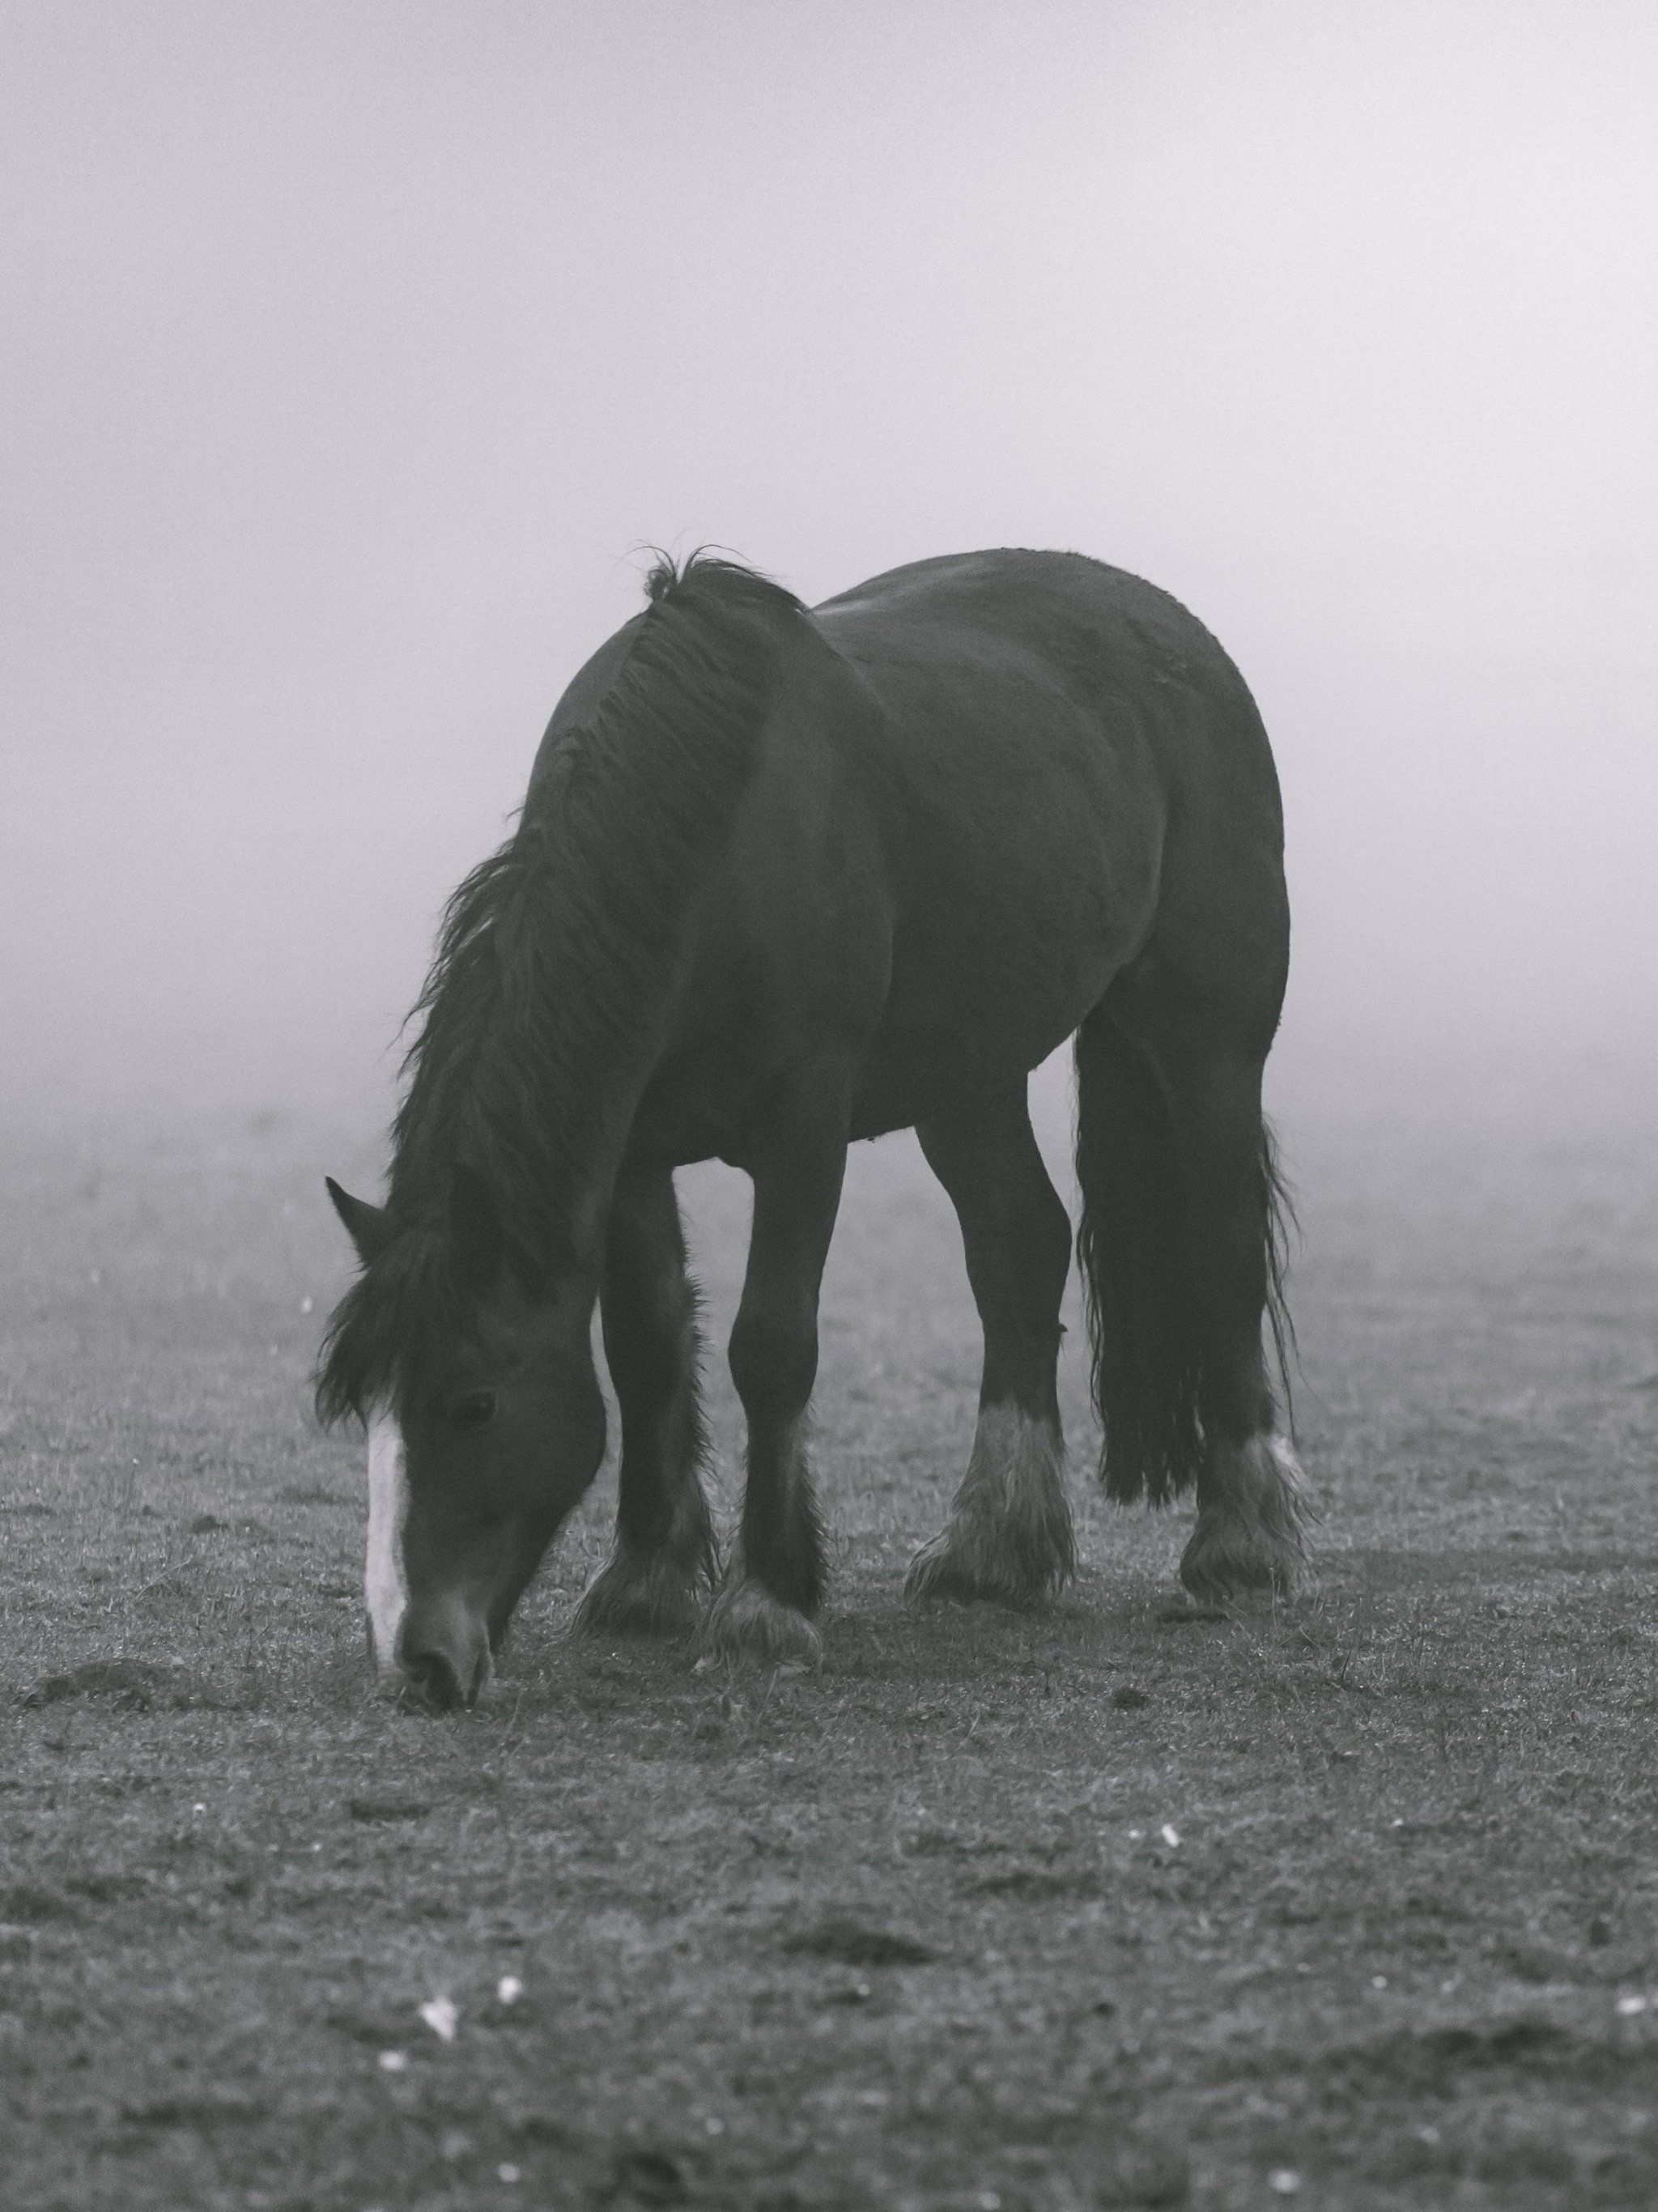 Horse in Fog Wallpaper, Android & Desktop Background